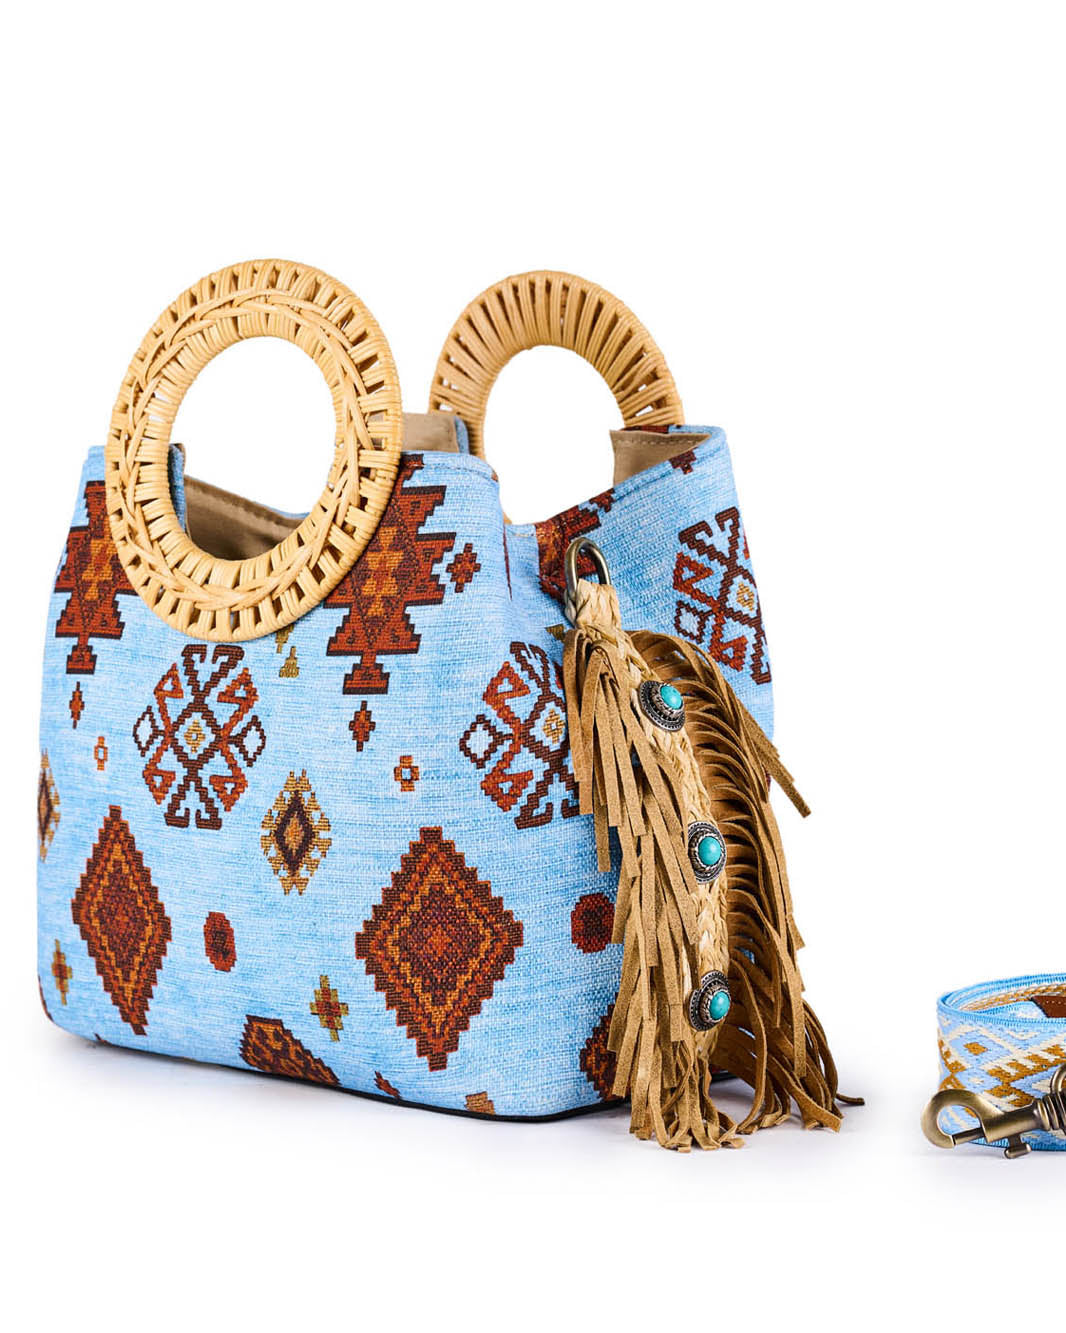 Blue boho handbag with wooden circular handles, tribal patterns, and fringe tassel detailing